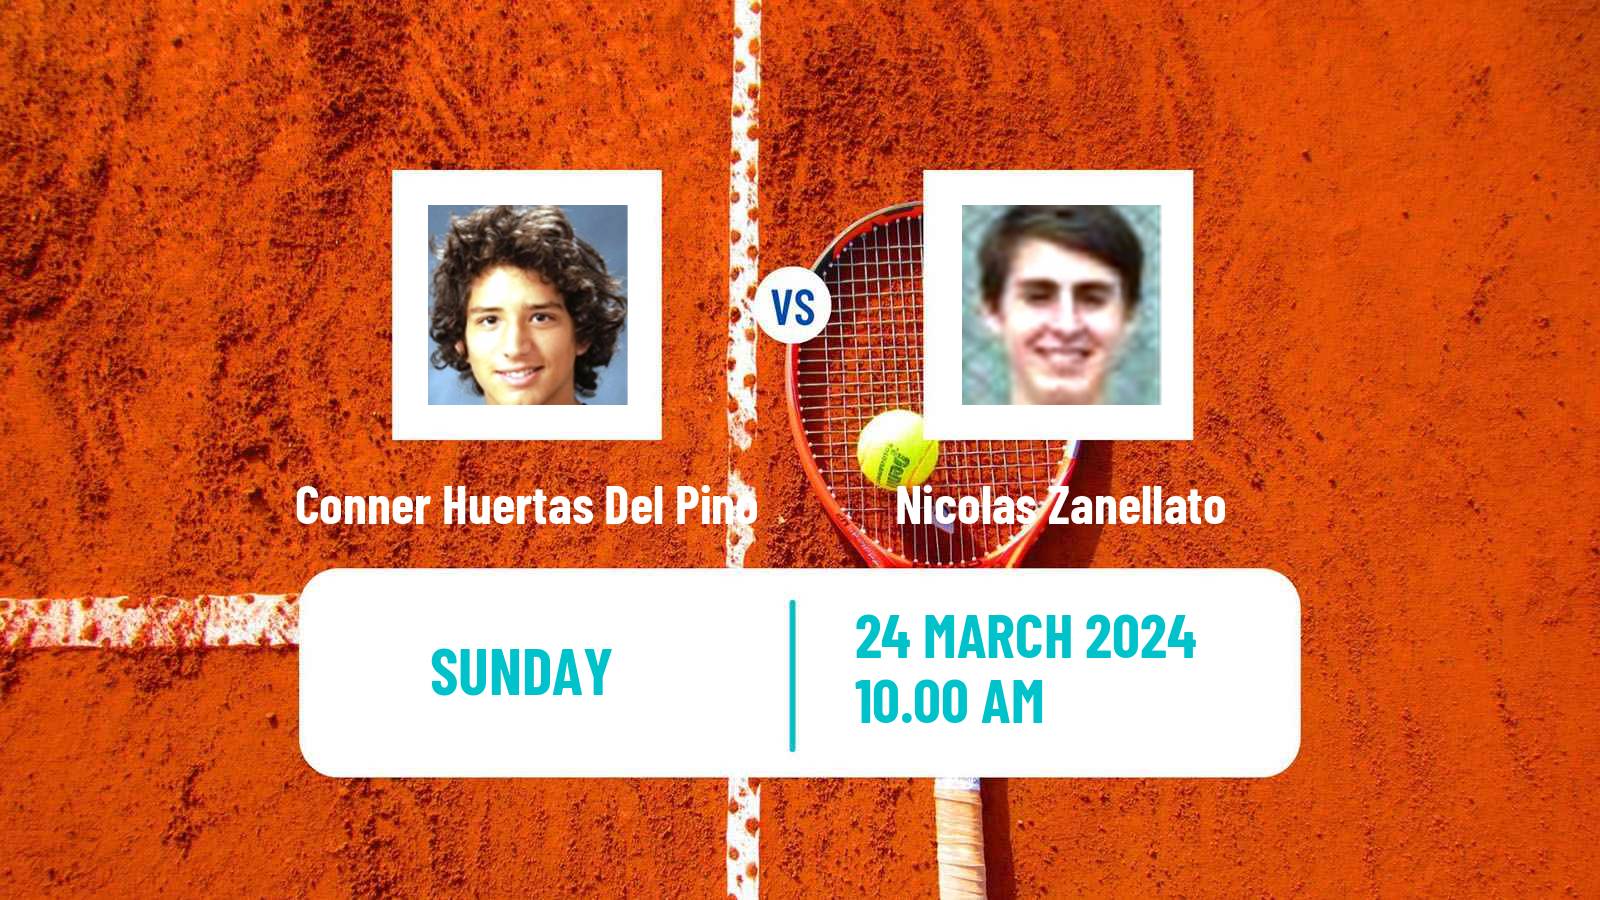 Tennis Sao Leopoldo Challenger Men Conner Huertas Del Pino - Nicolas Zanellato